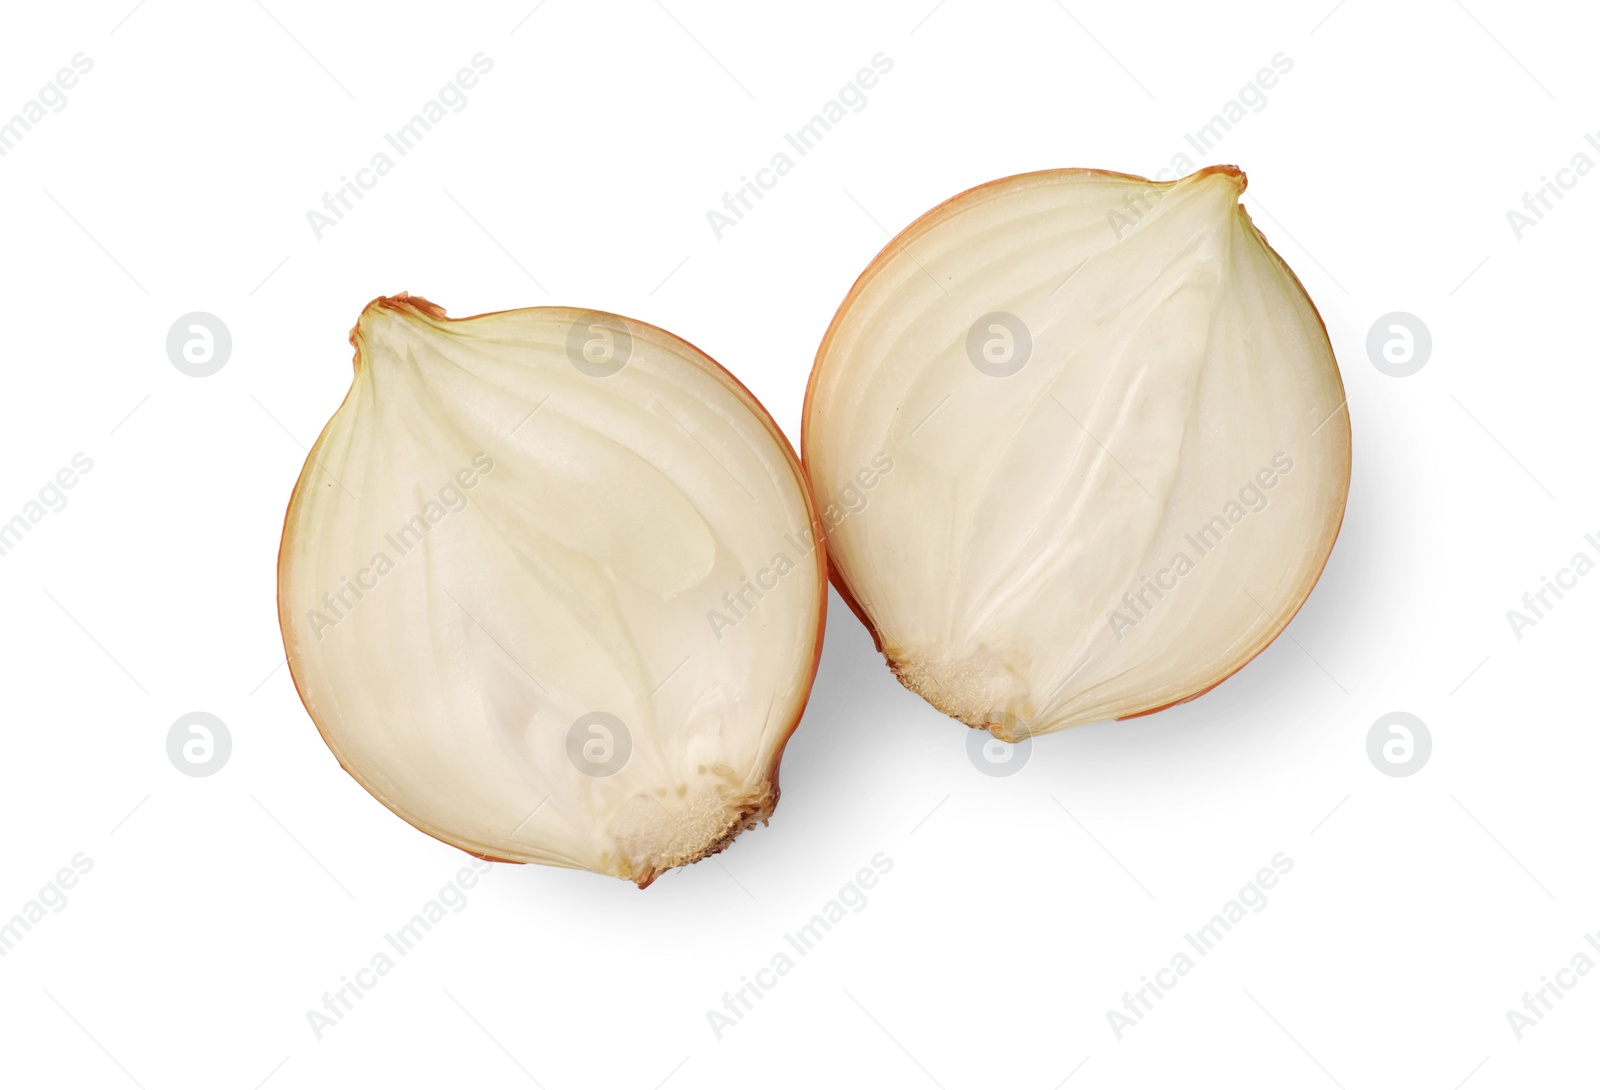 Photo of Halves of fresh onion on white background